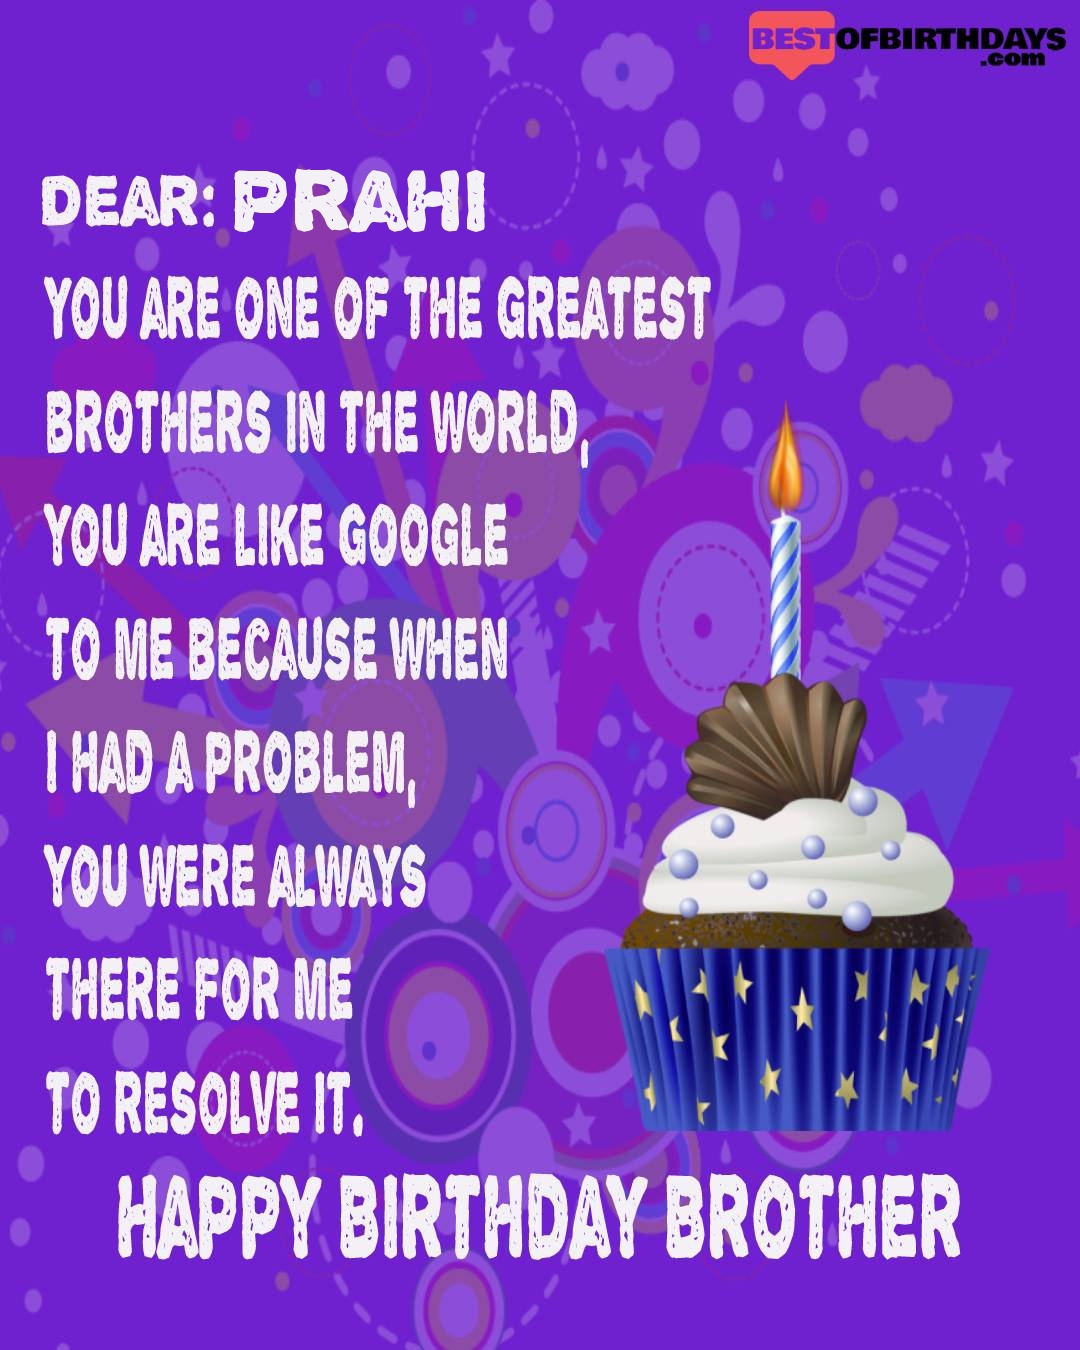 Happy birthday prahi bhai brother bro